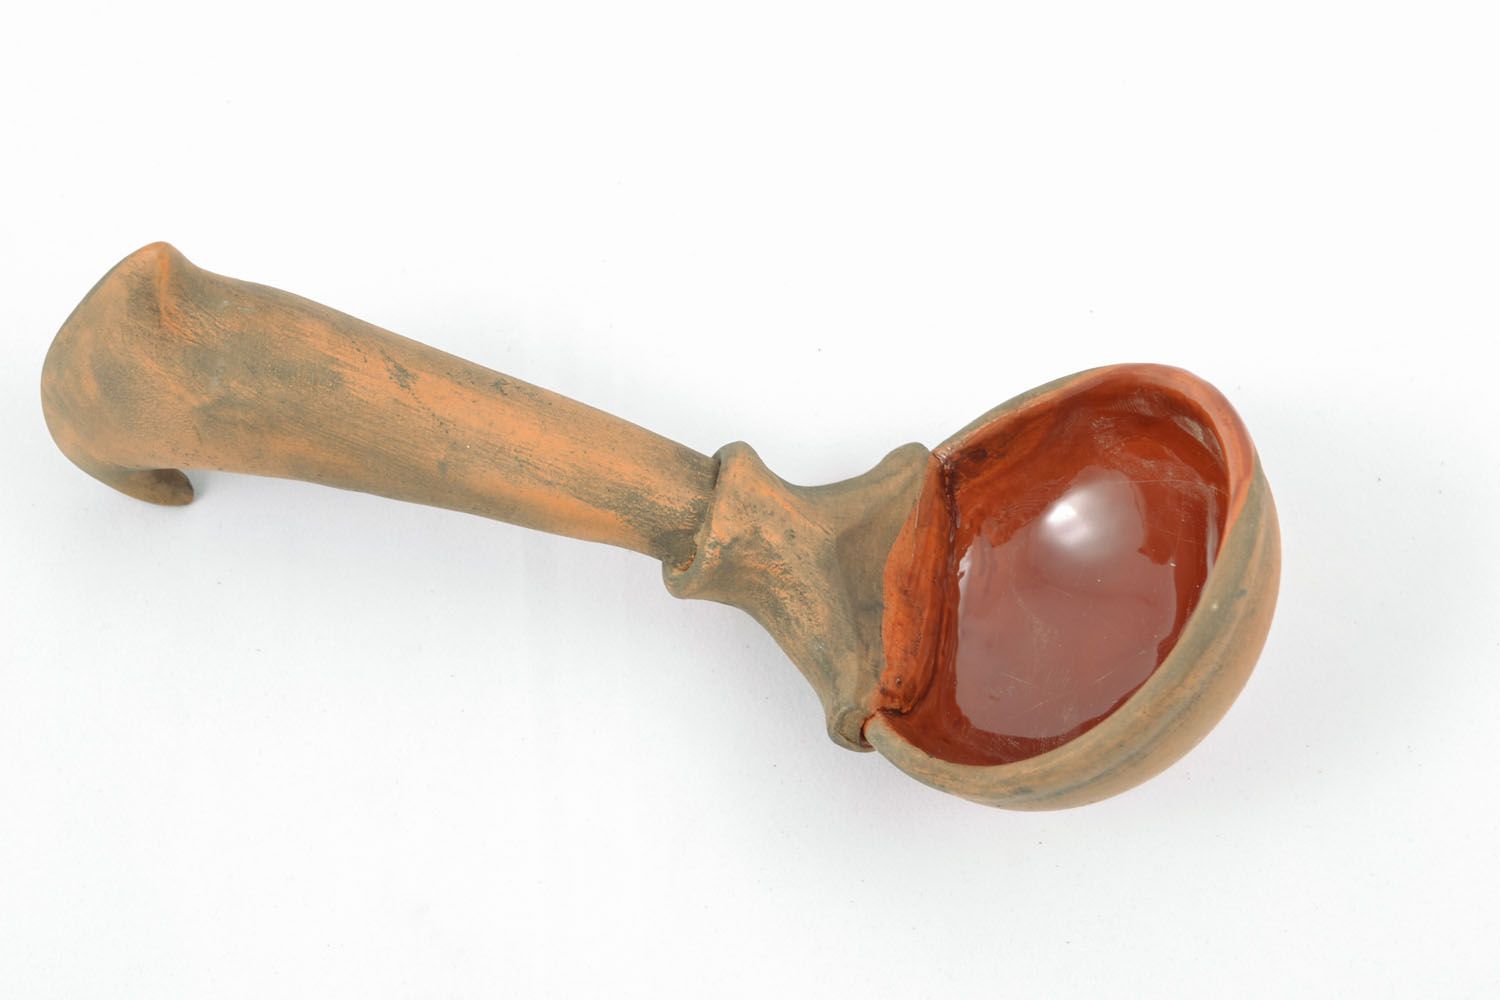 Homemade ceramic spoon photo 1